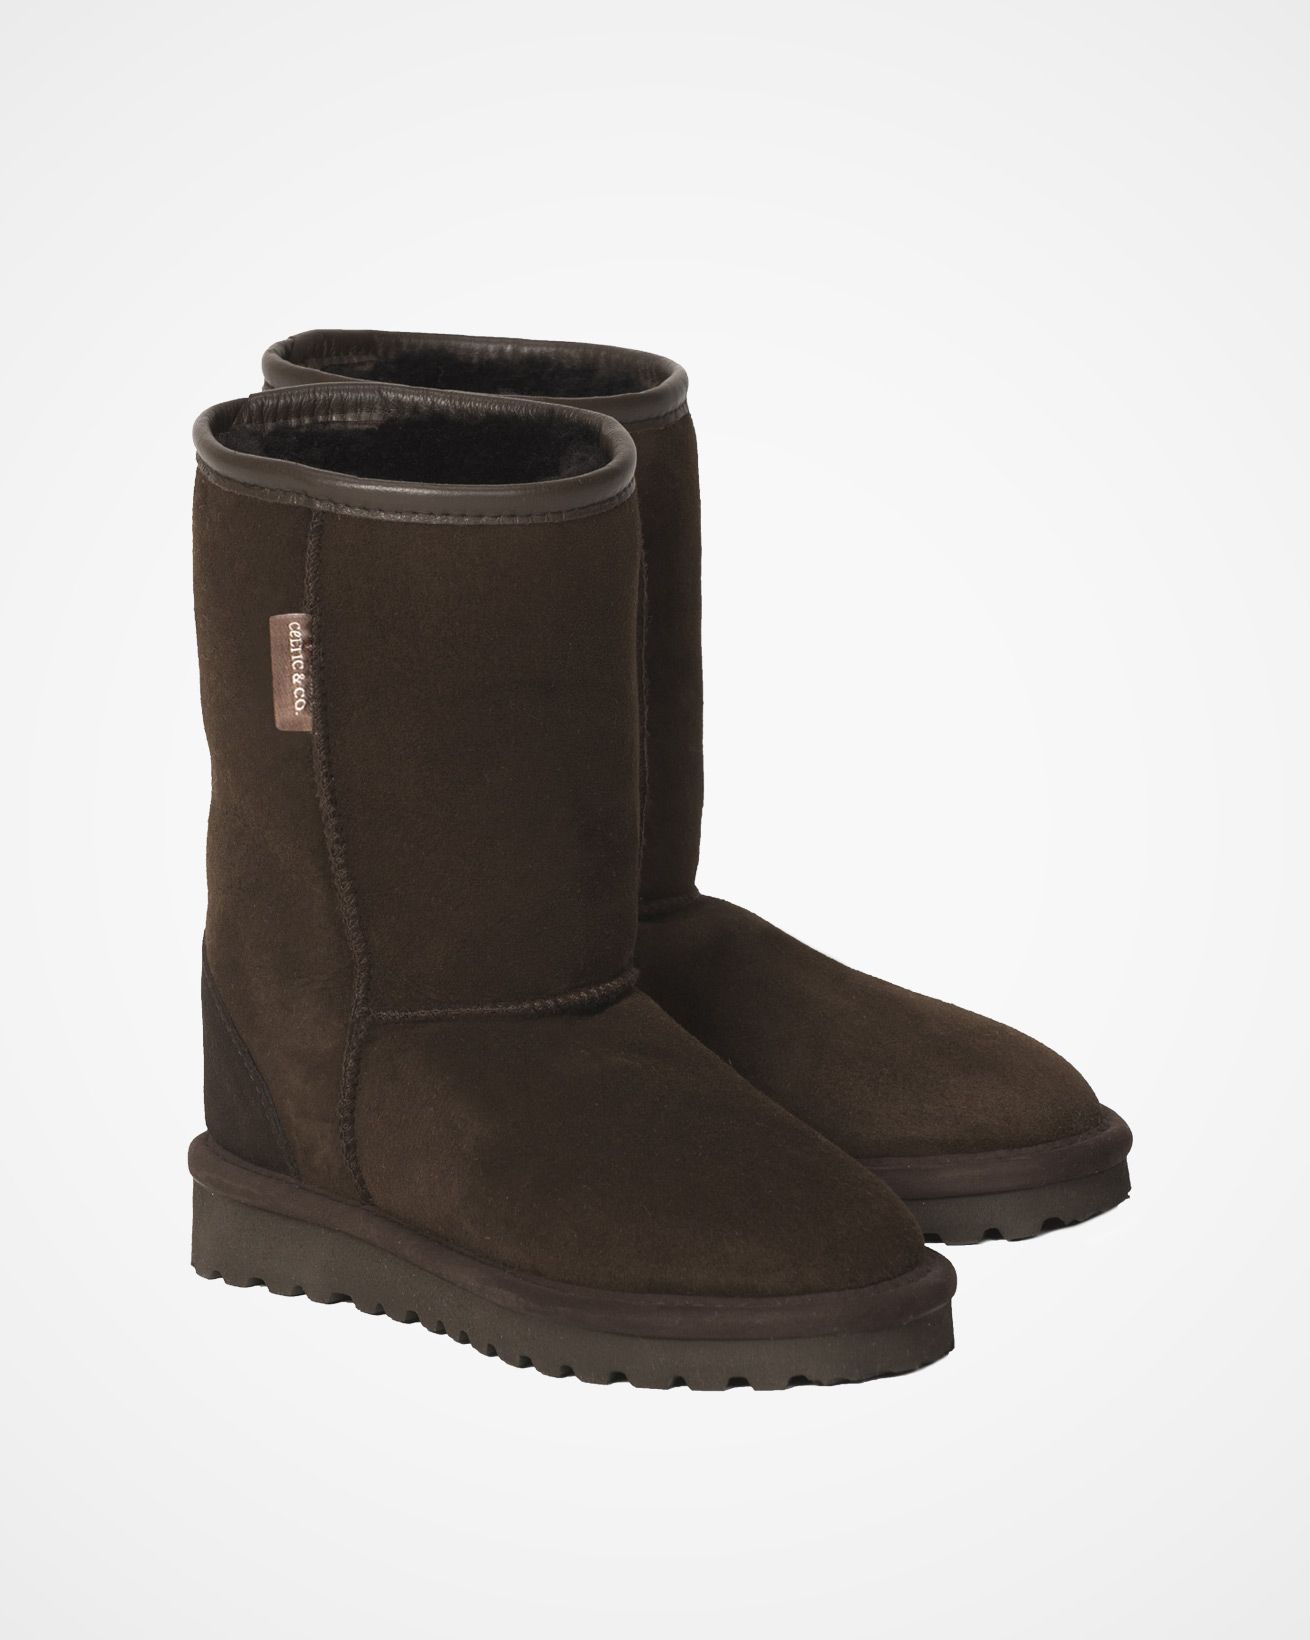 5894_classic-sheepskin-boots-regular_mocca_pair.jpg